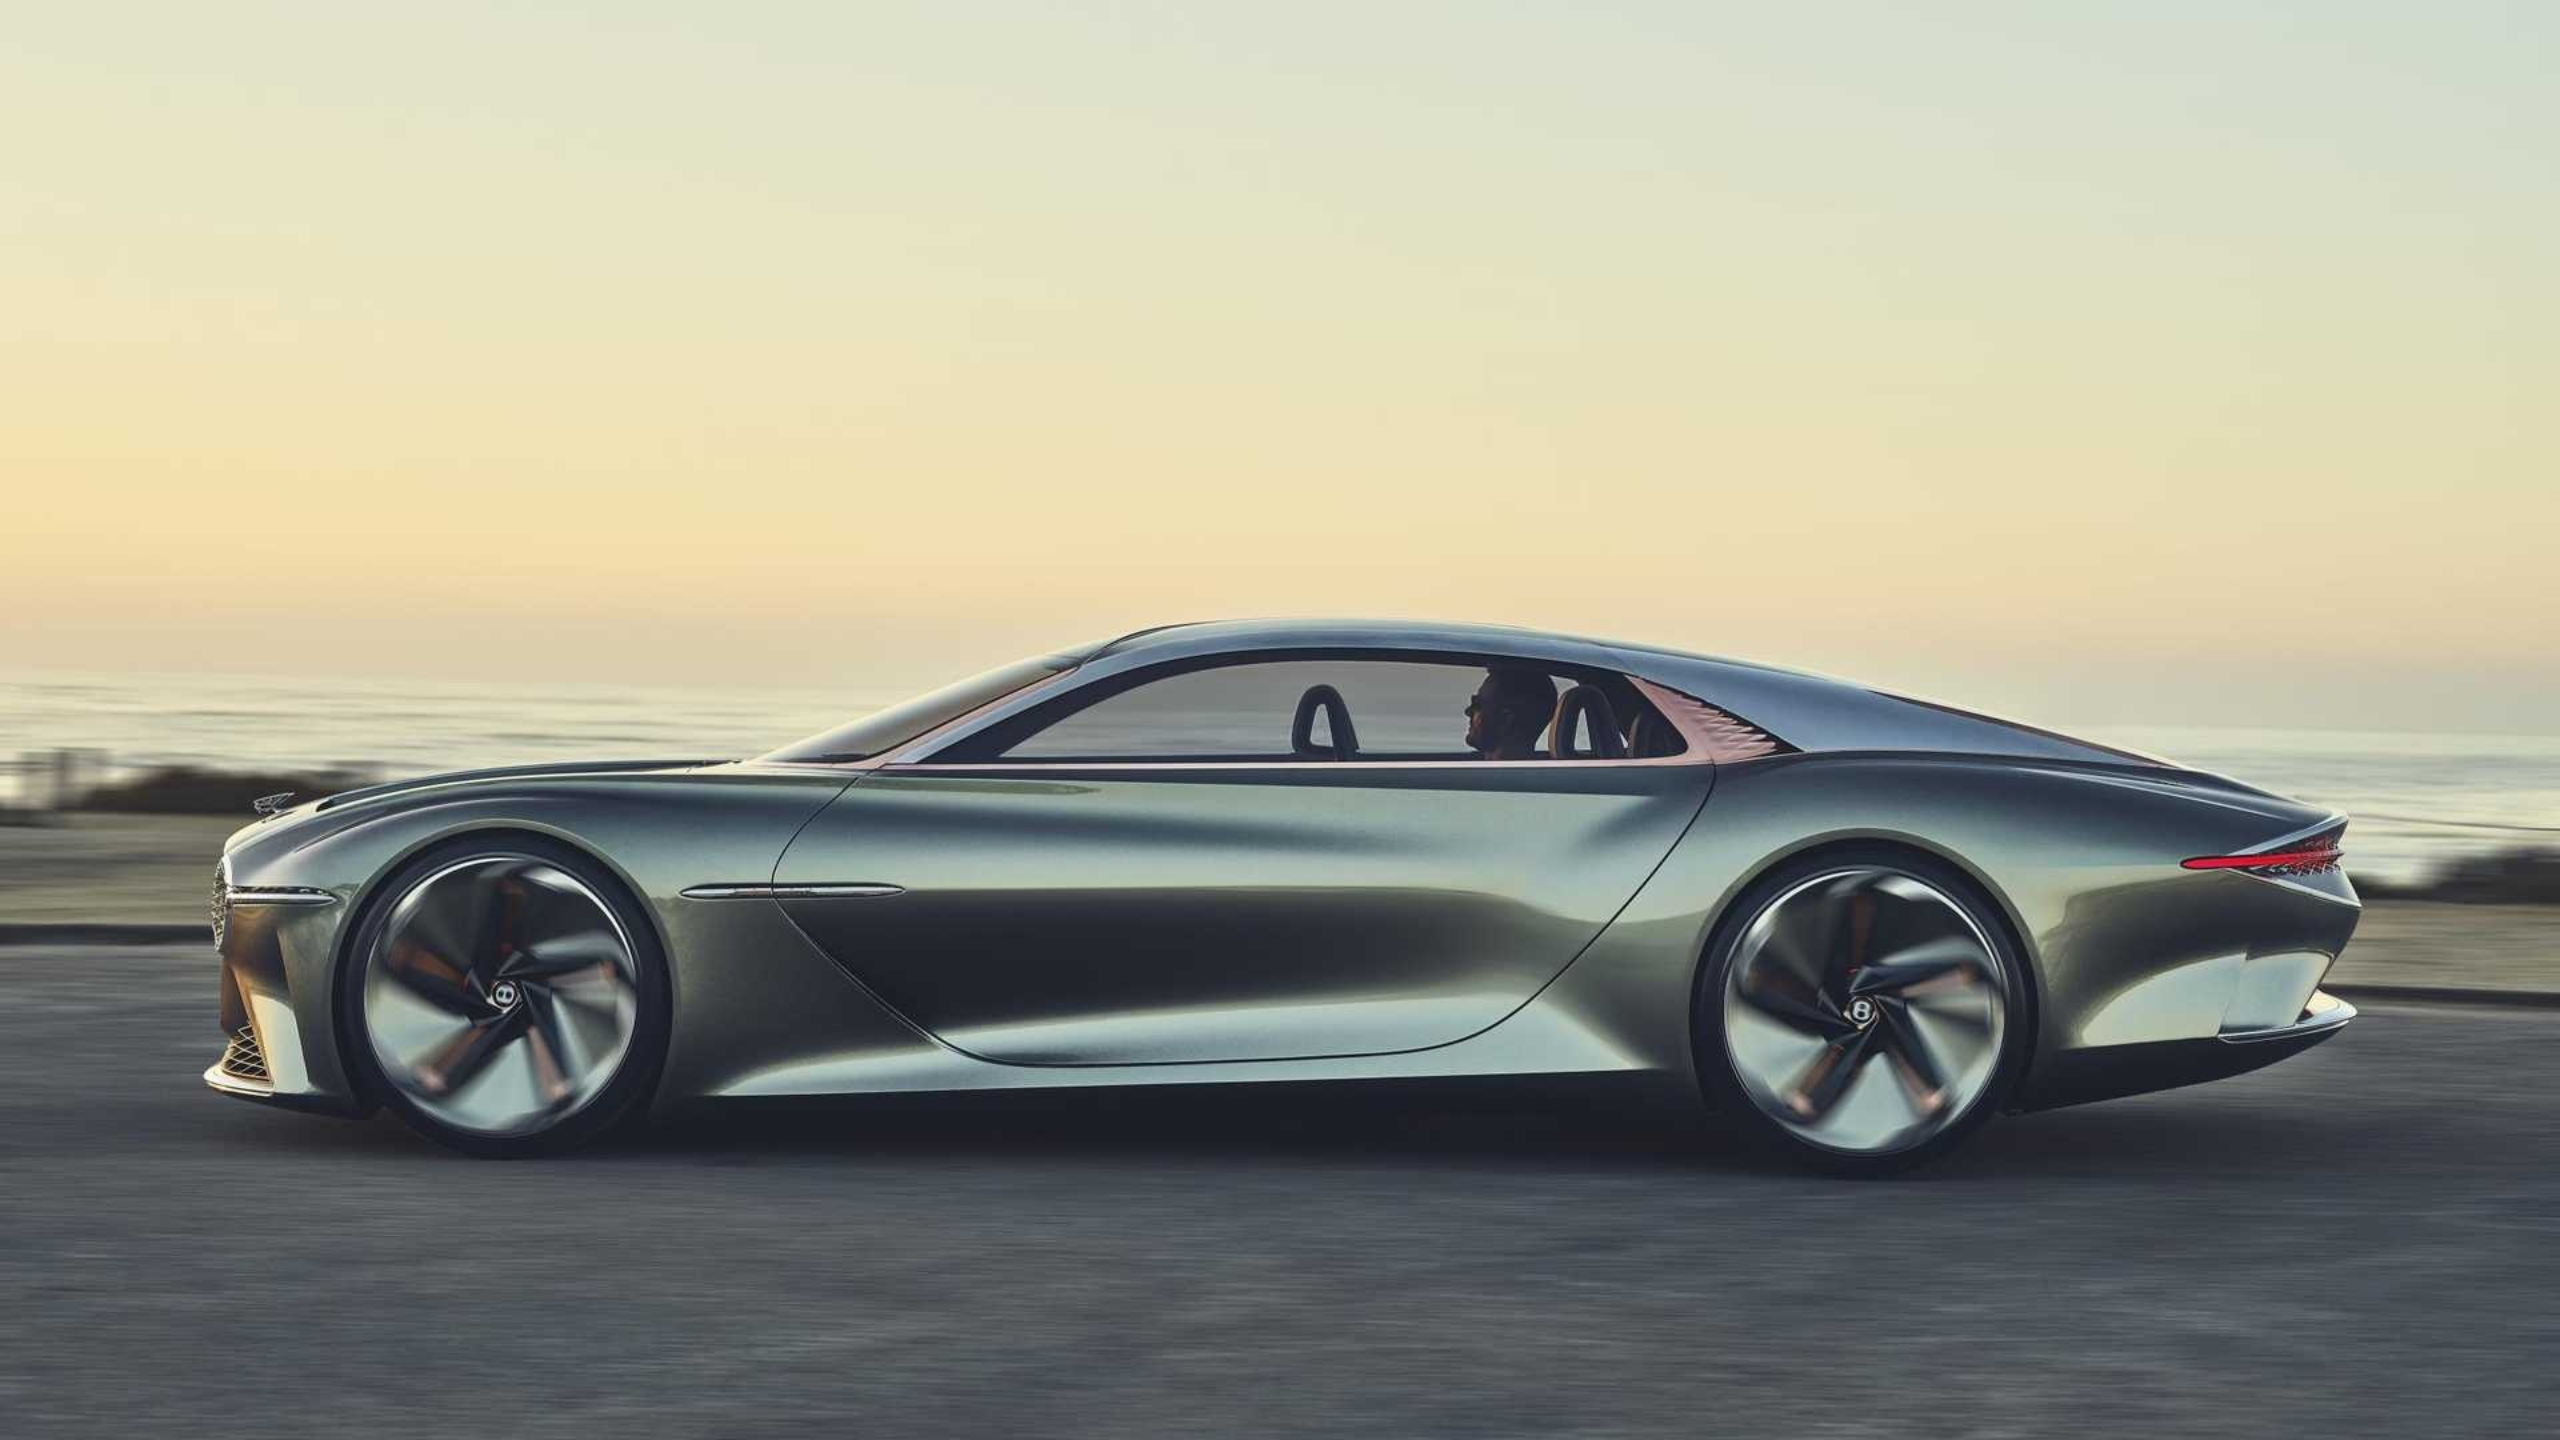 The Bentley EXP 100 GT concept